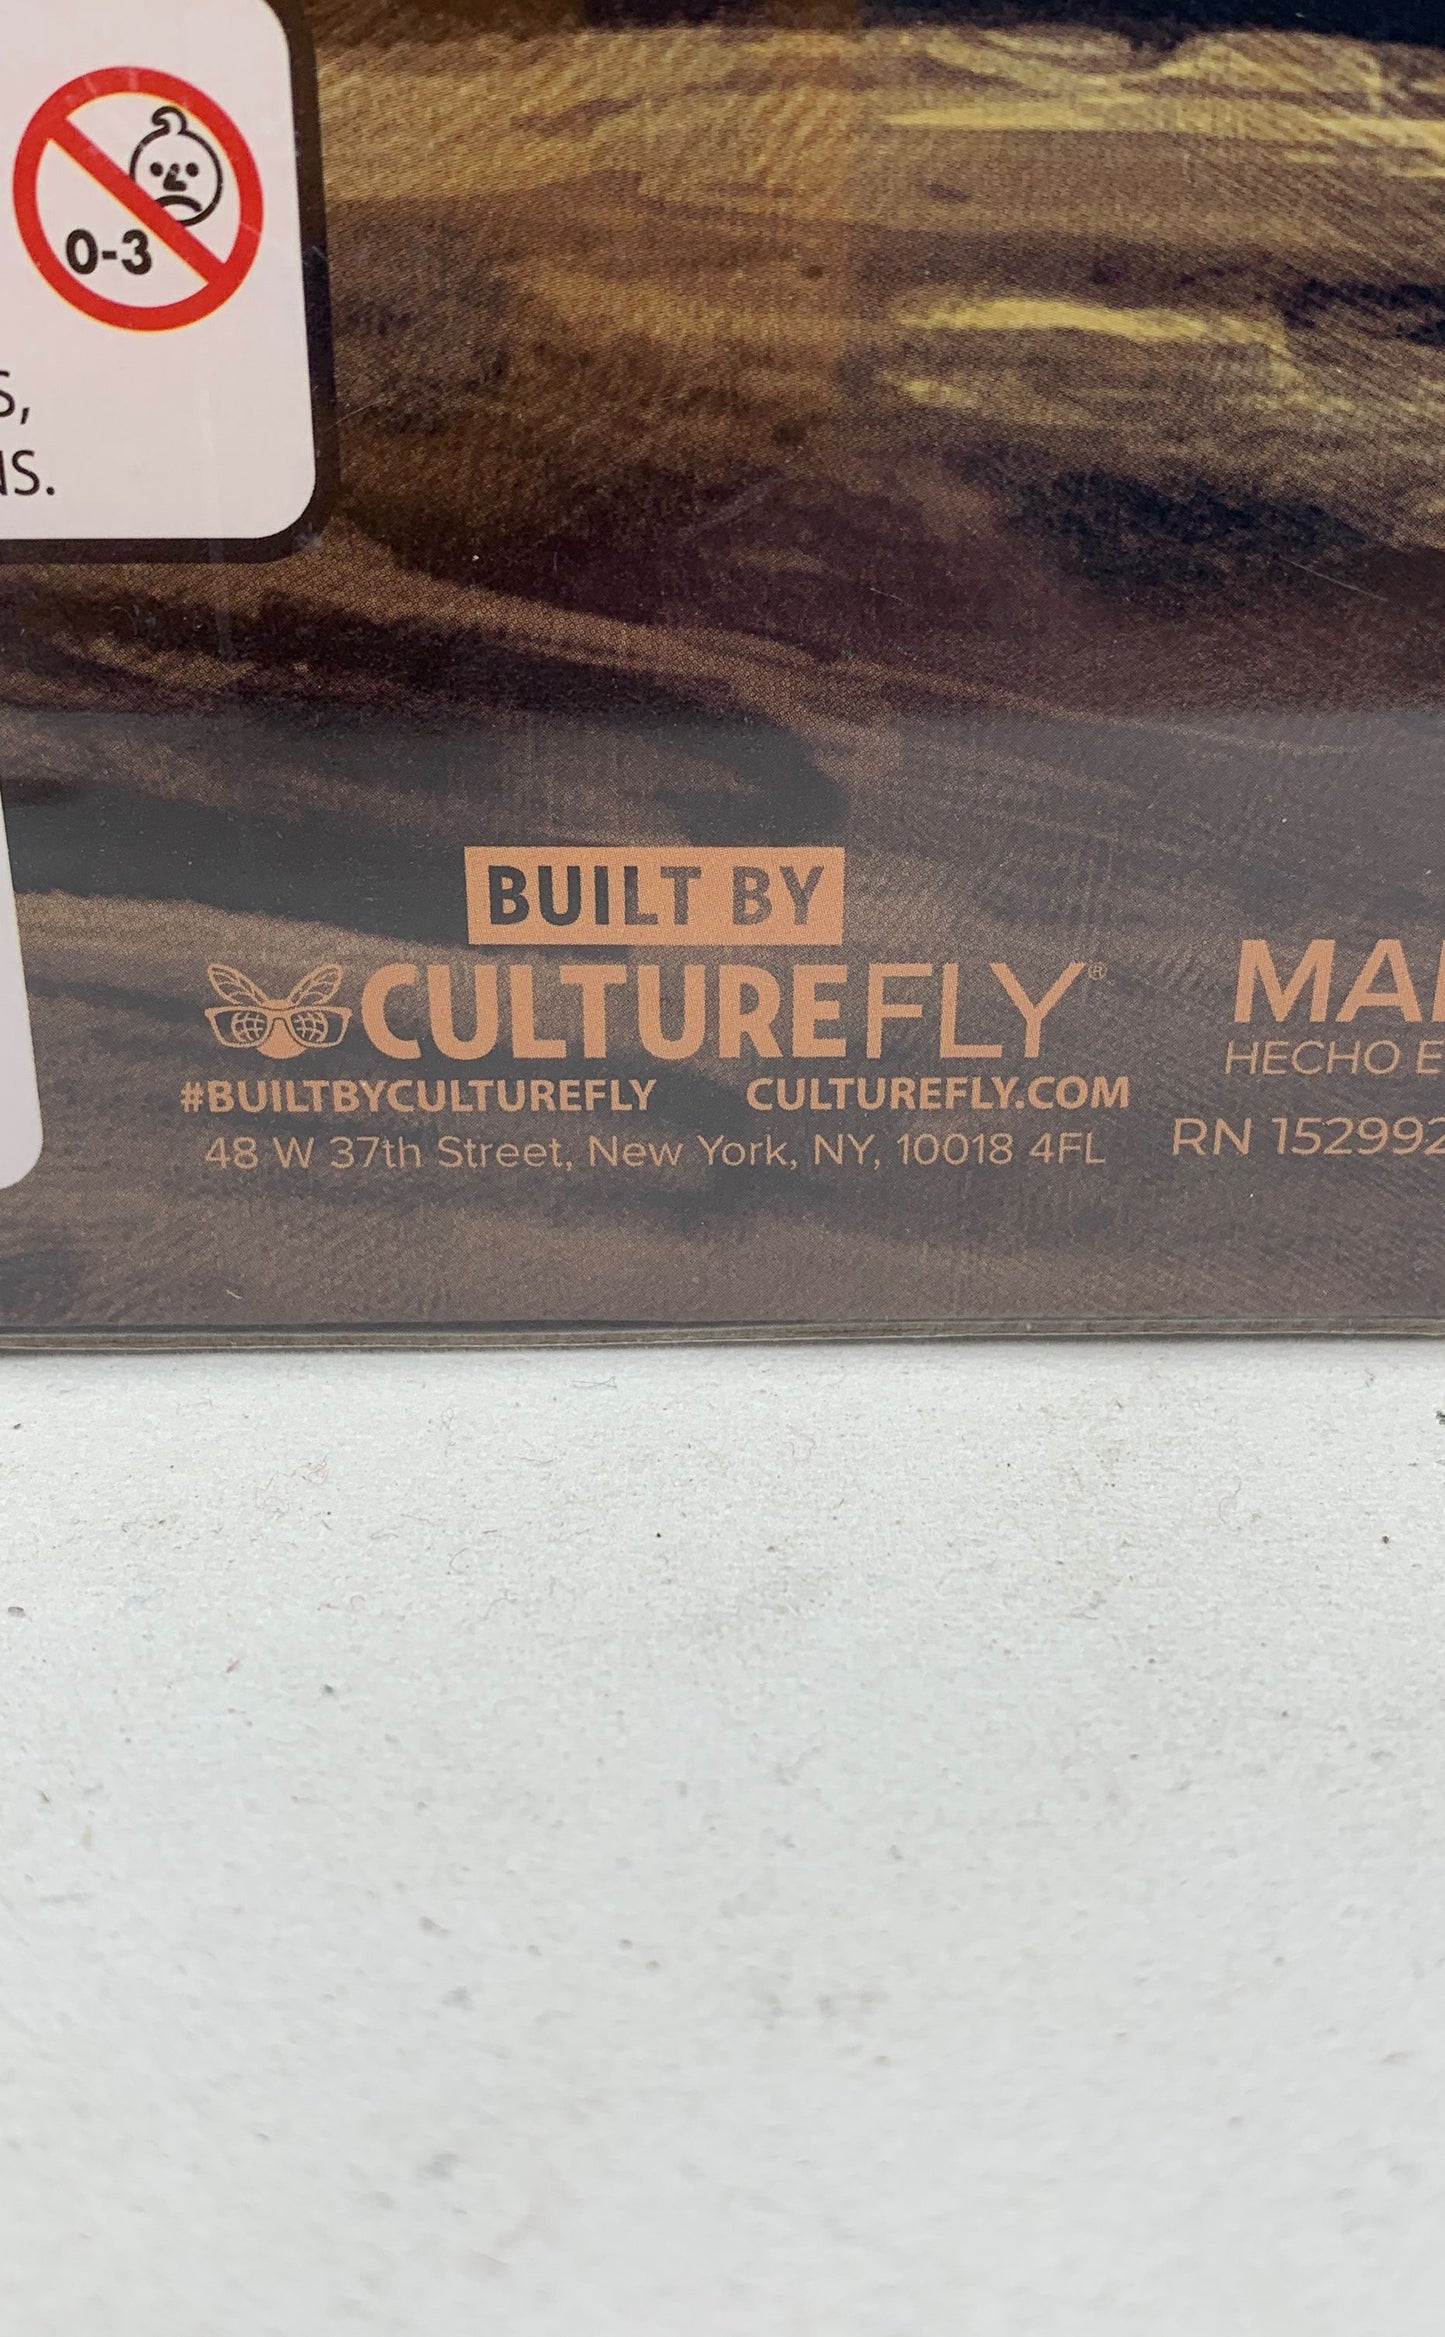 Culturefly Star Wars Mandalorian Collectors Box 5 Piece New